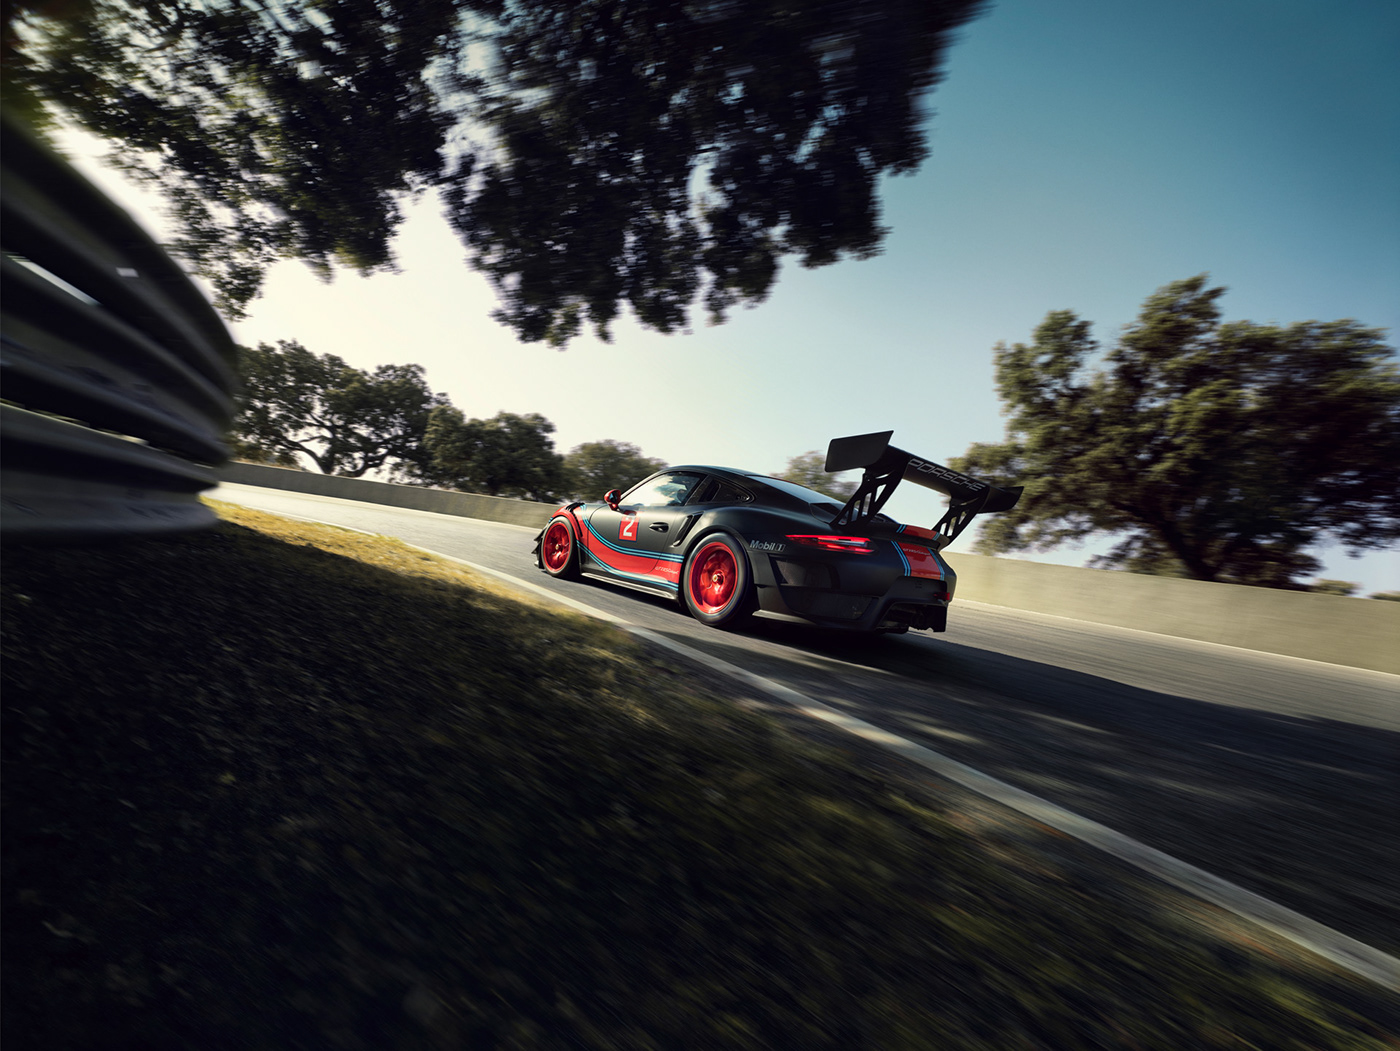 Porsche GT2 Porsche 911 patrick dempsey Racing track brand-new ClubSport